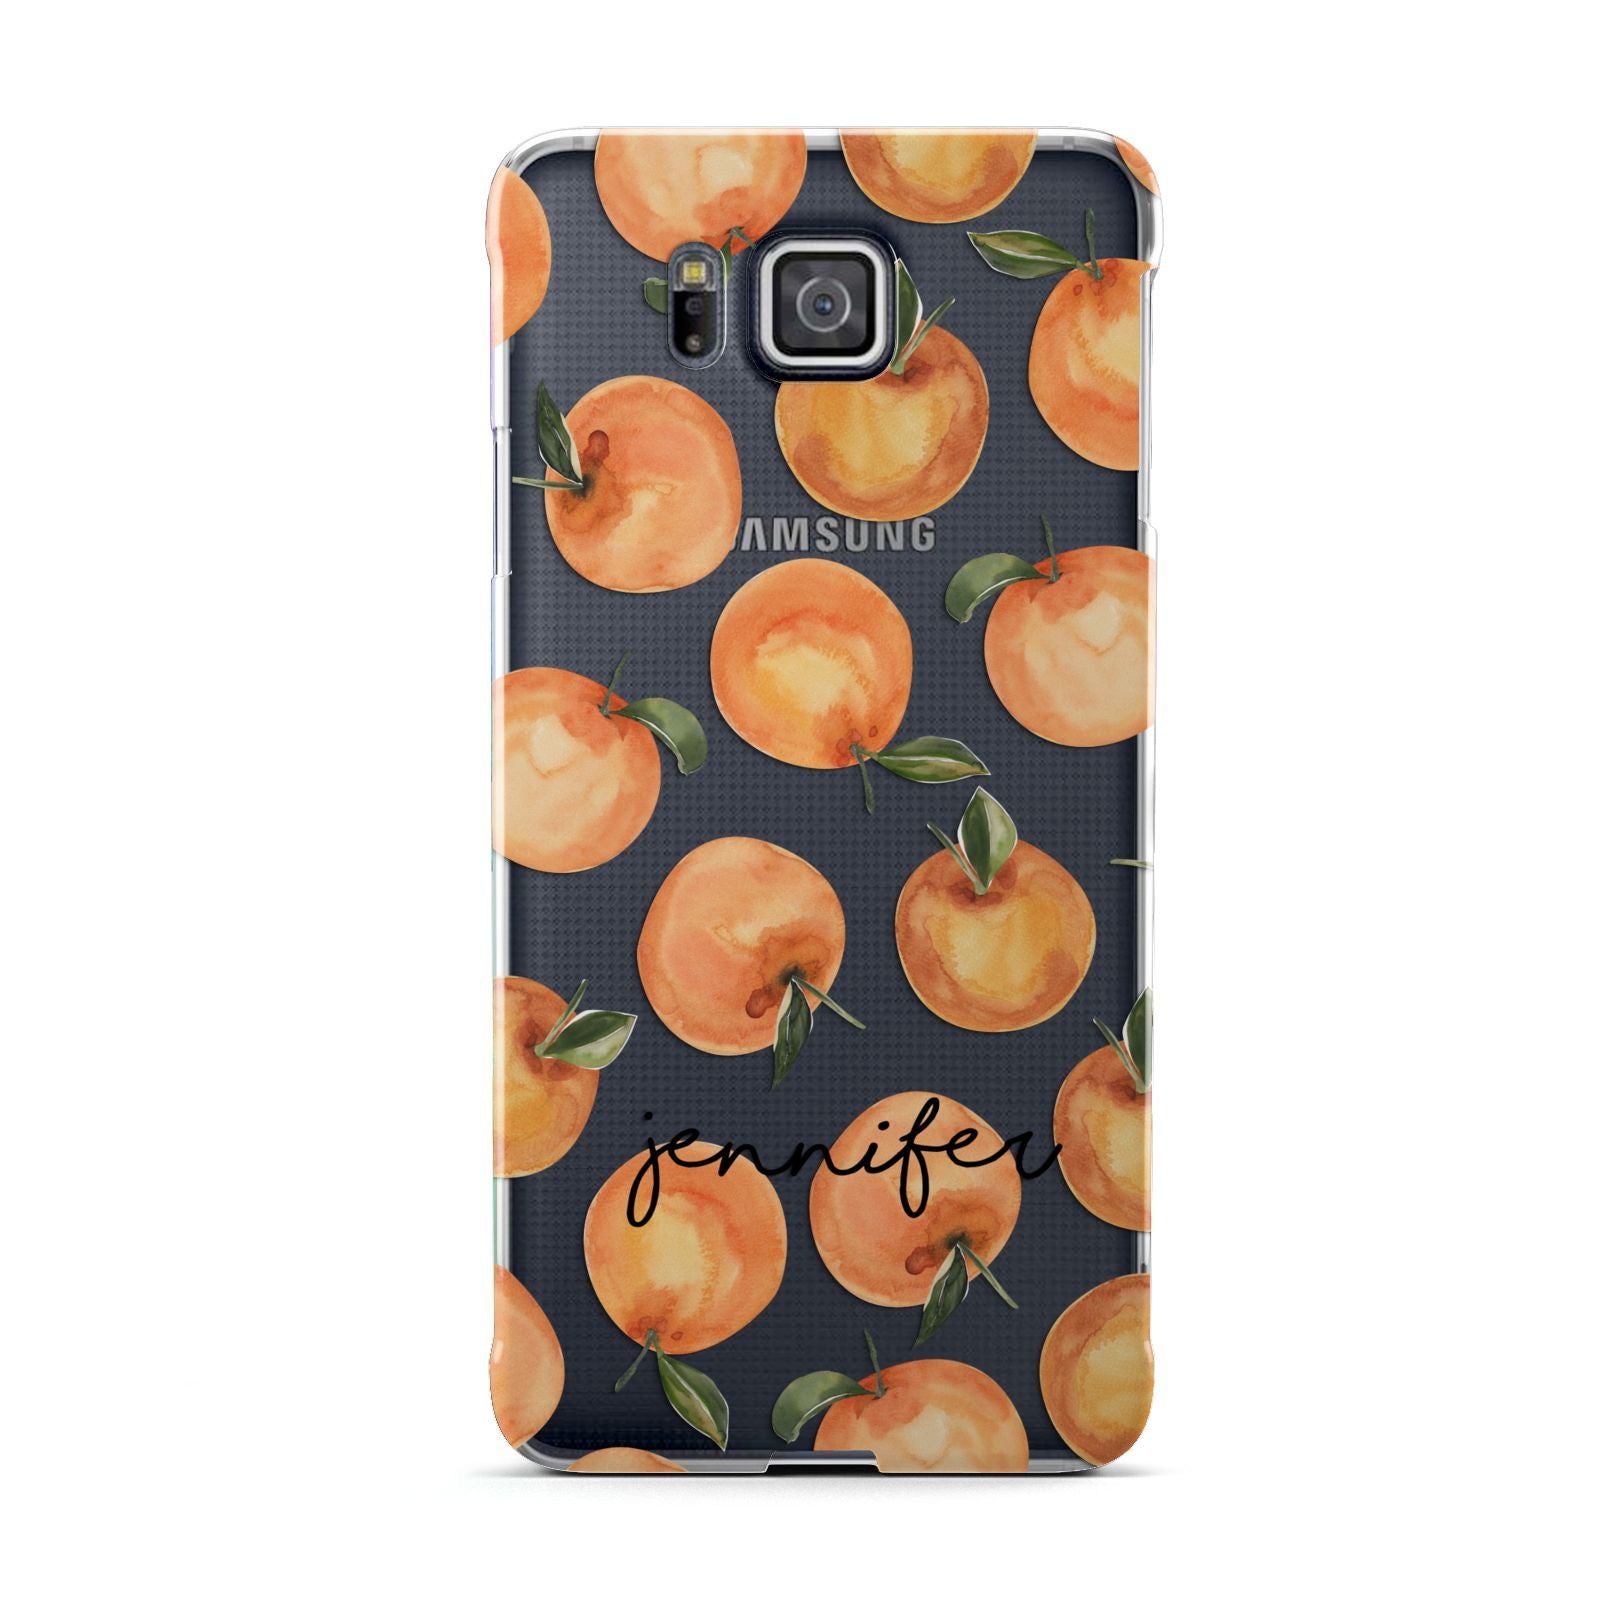 Personalised Oranges Name Samsung Galaxy Alpha Case